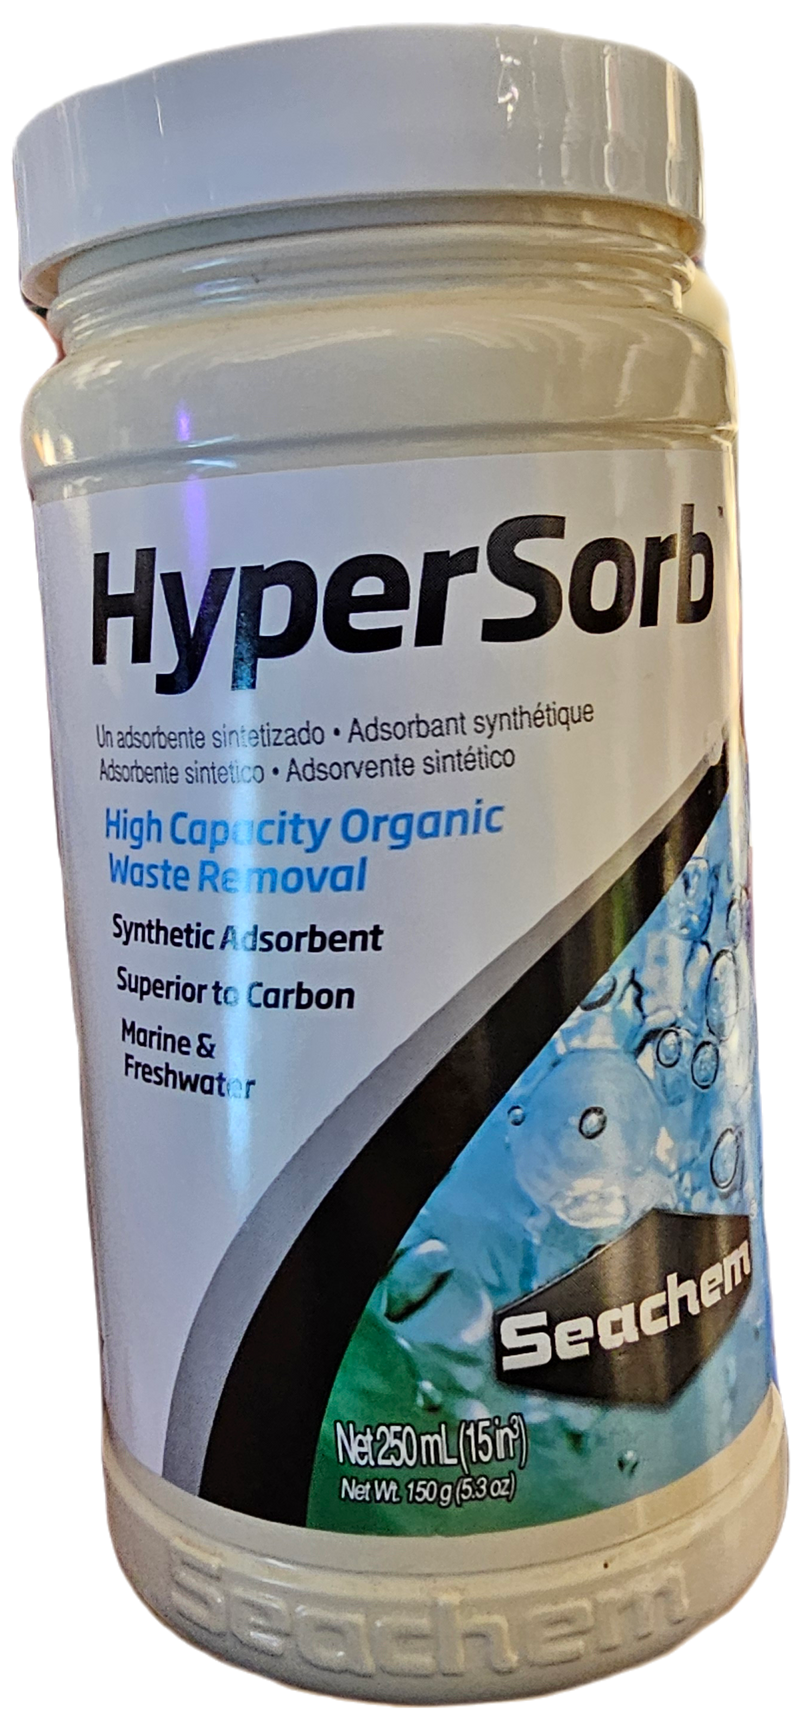 Seachem Hypersorb - Fresh N Marine